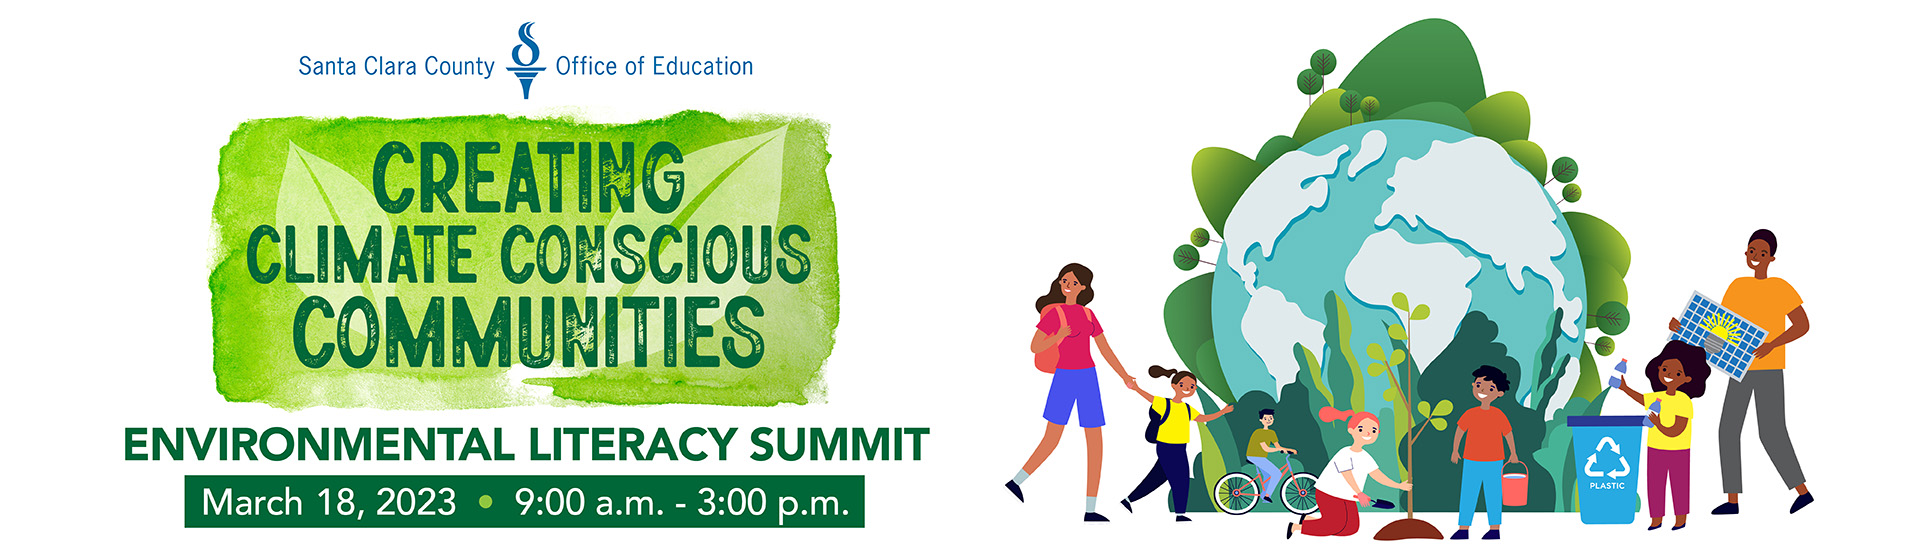 Environmental Literacy Summit 2023 